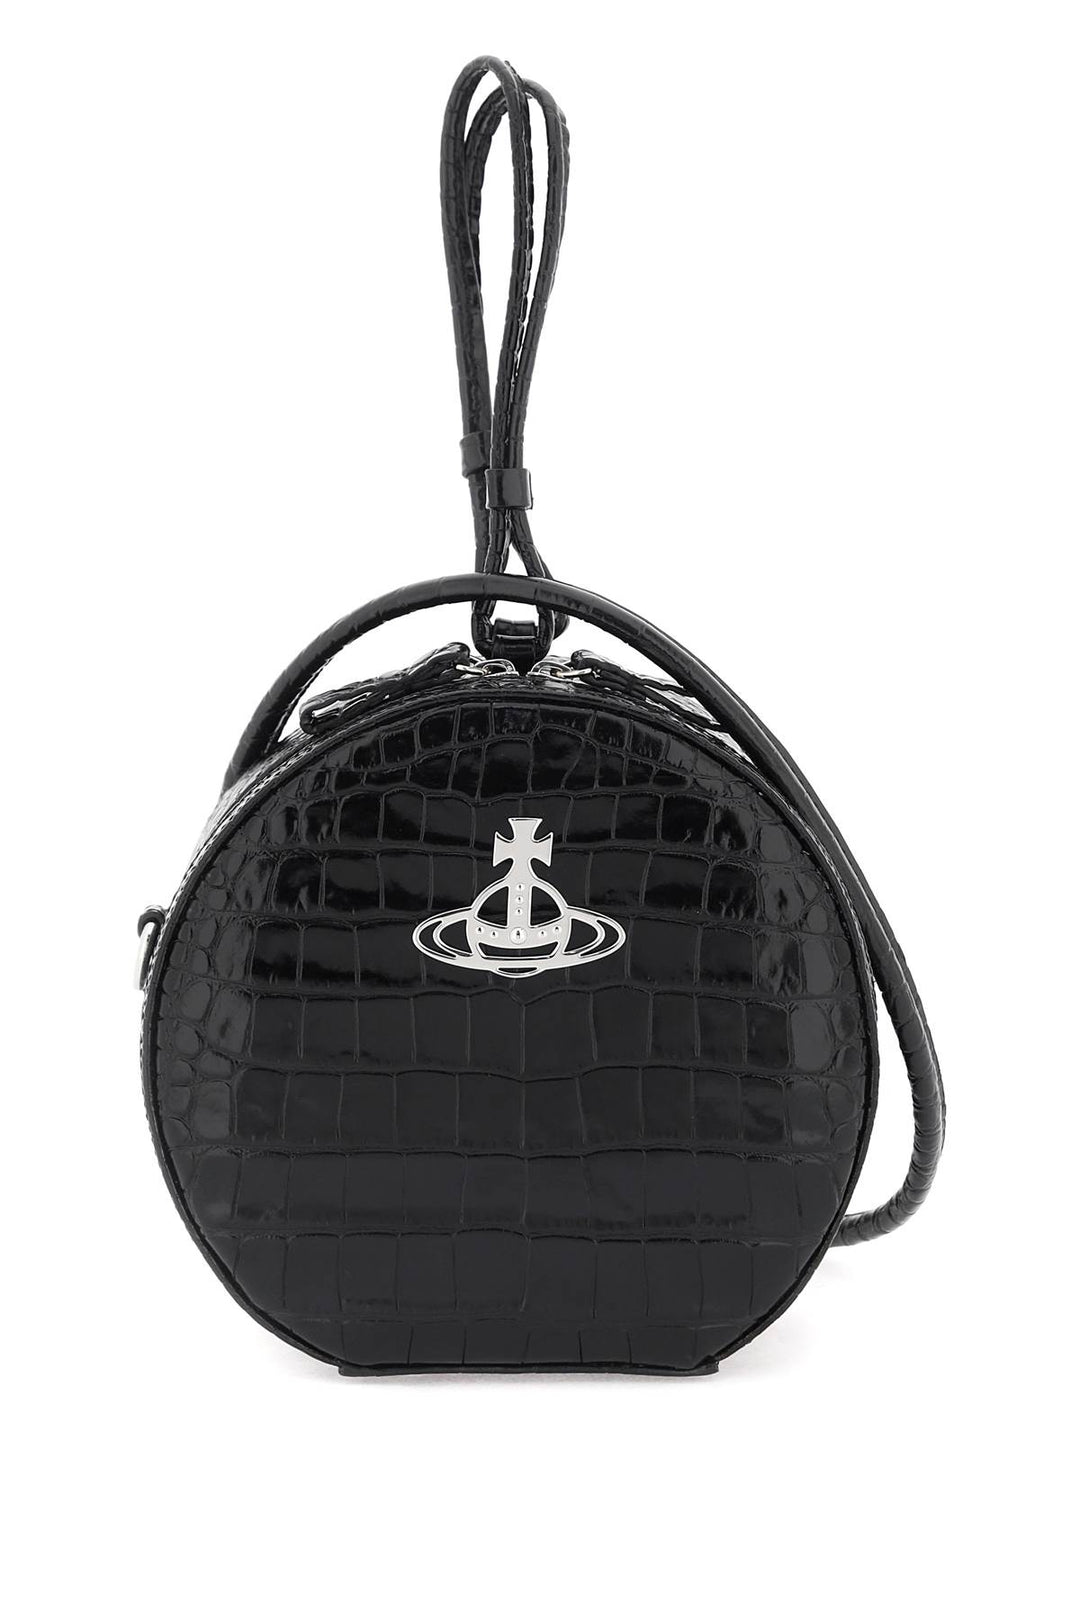 Vivienne westwood hattie handbag-0